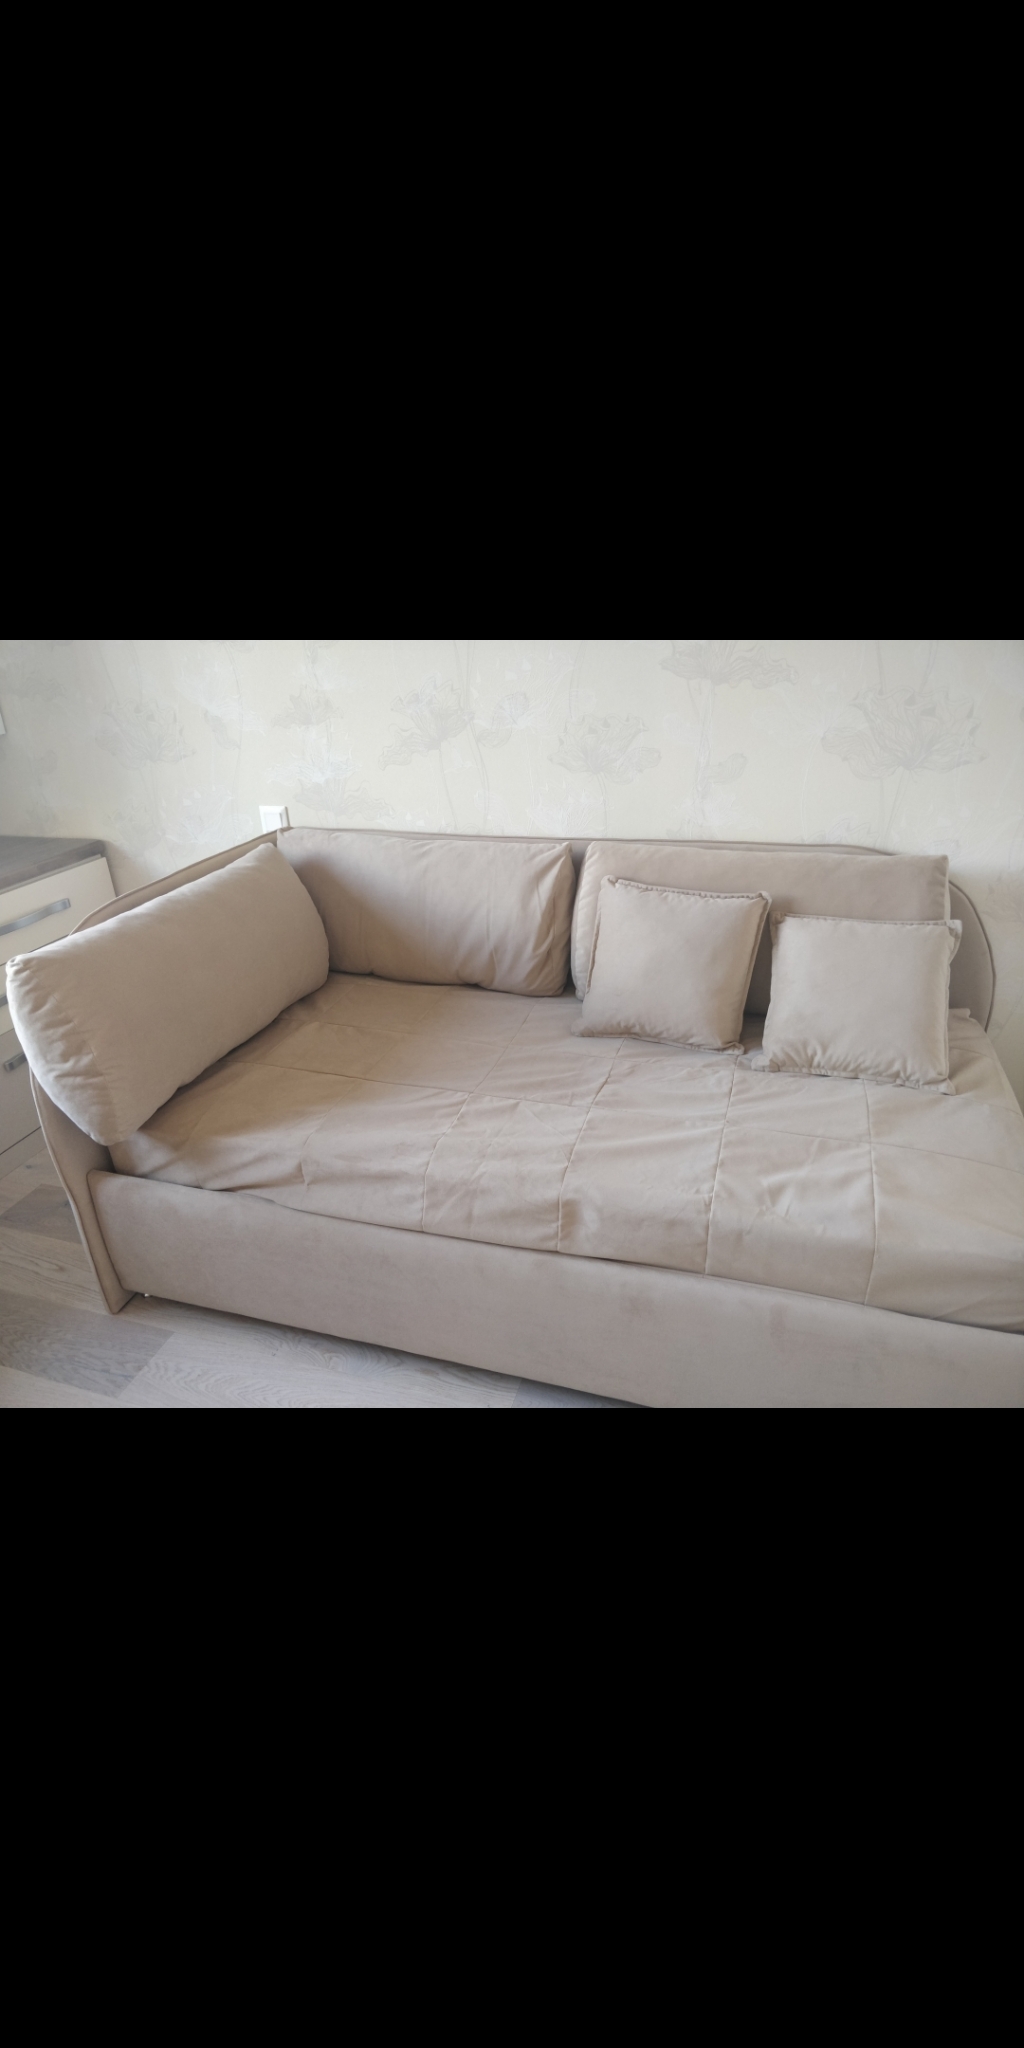 Кровати - Кровати мебельной фабрики Damasti